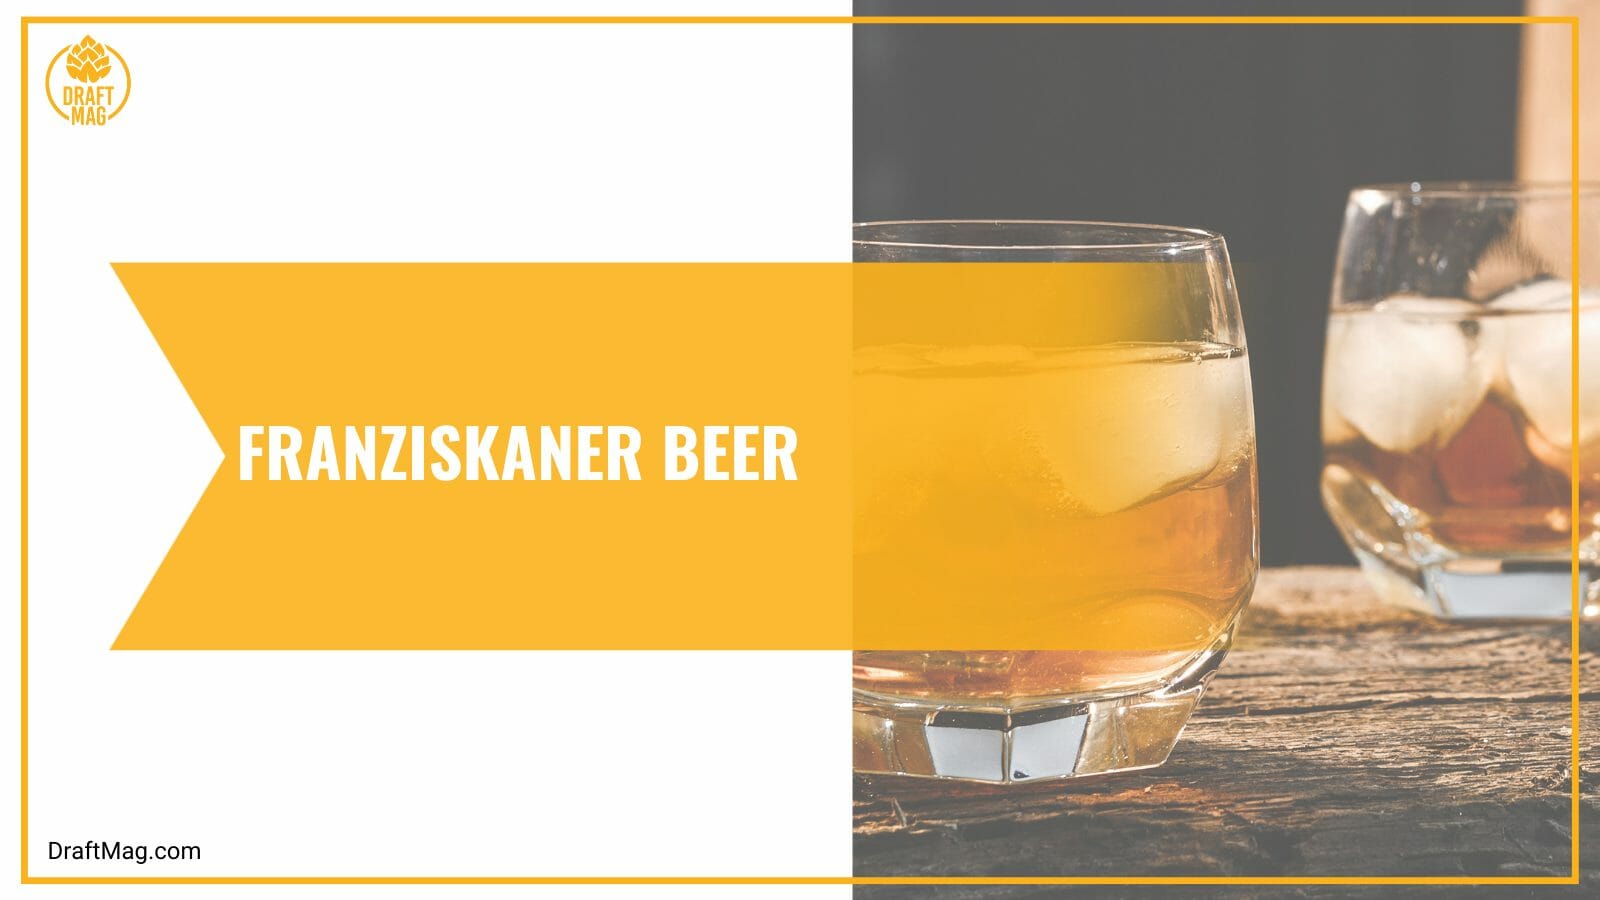 Franziskaner beer a clean taste